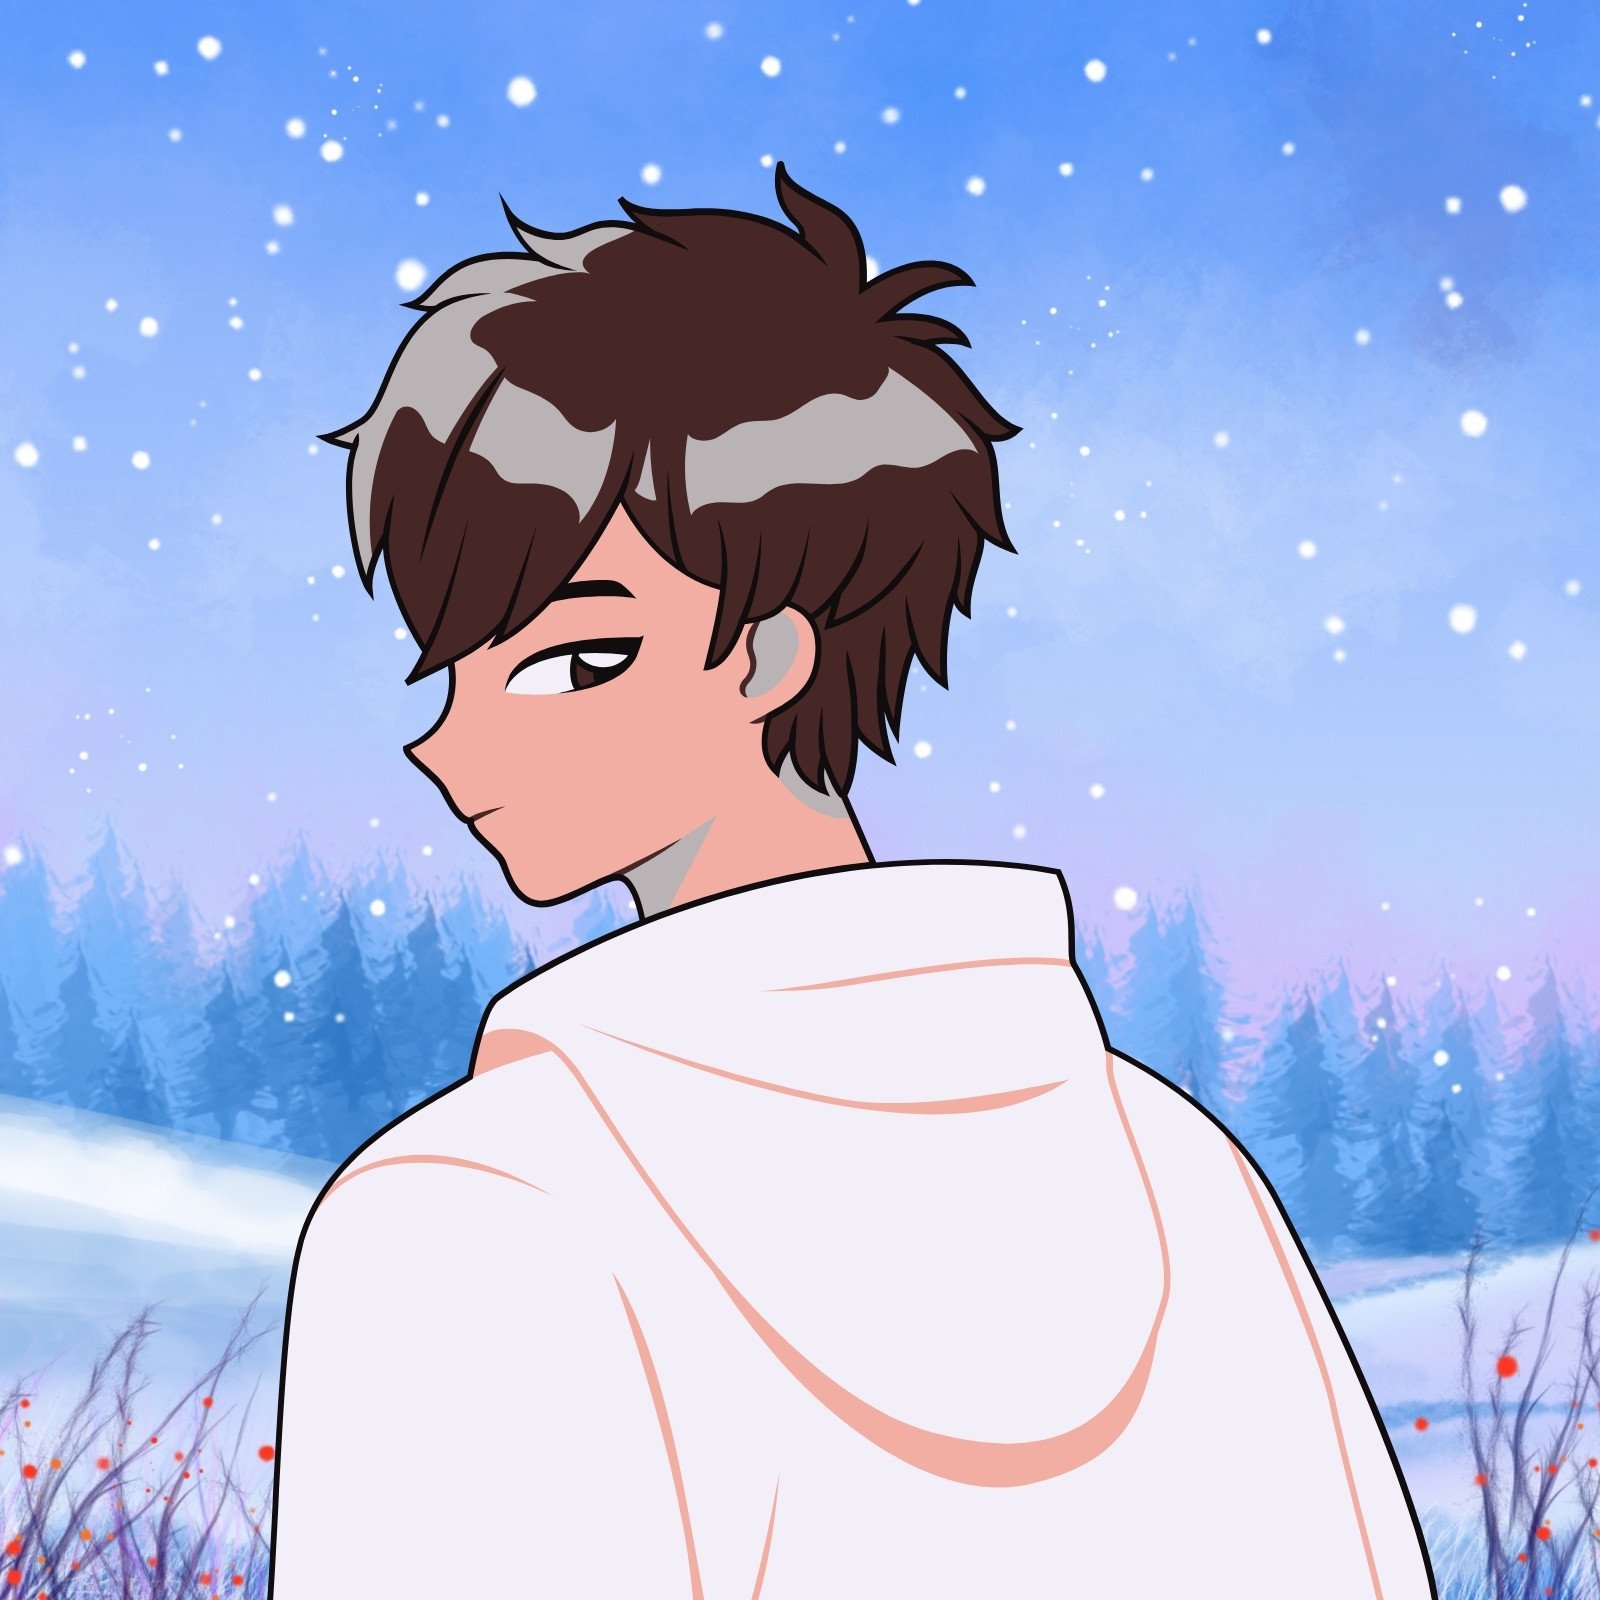 Blue and White Gradient Watercolor Sparkle Snow Anime Boy Illustrative Avatar